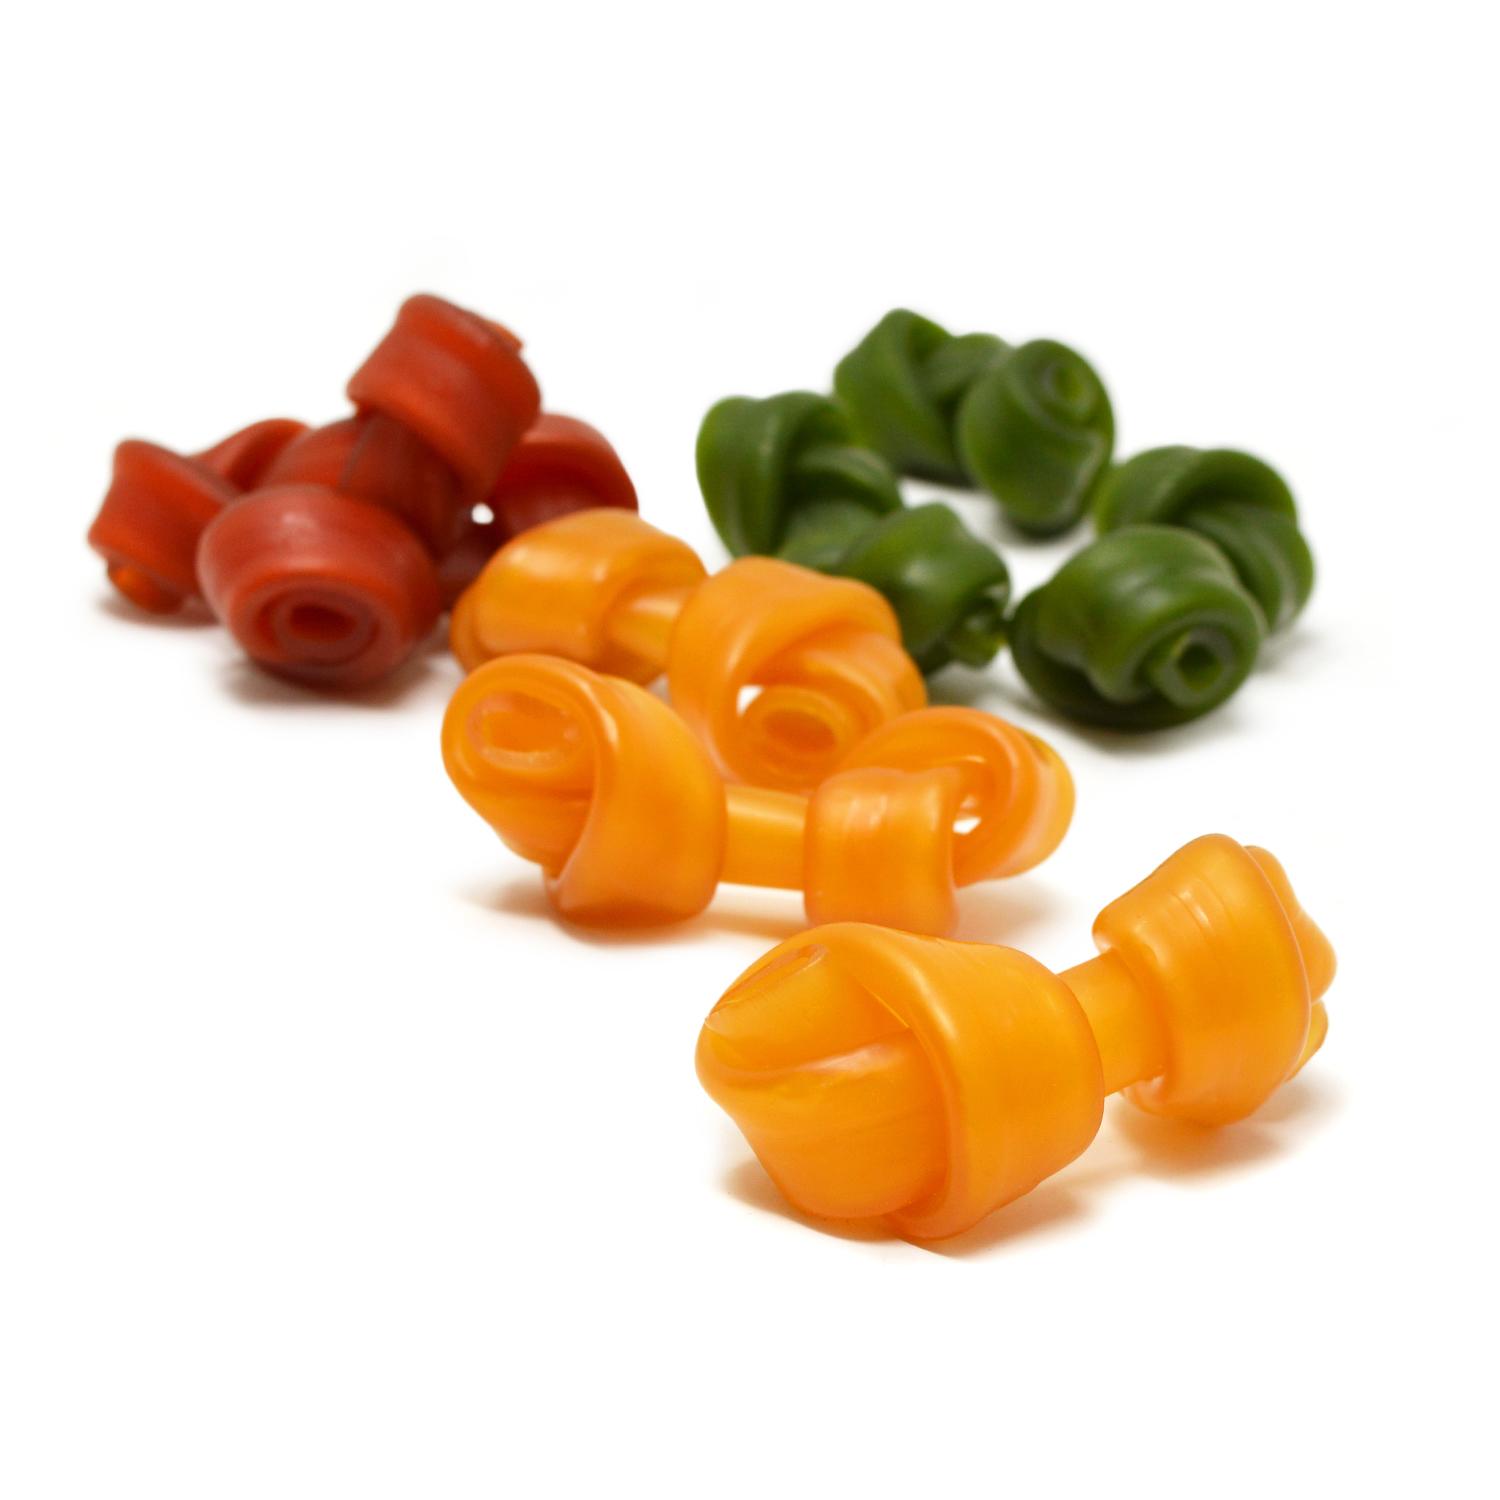 A selection of orange, green and purple grain free pawtato dog chews